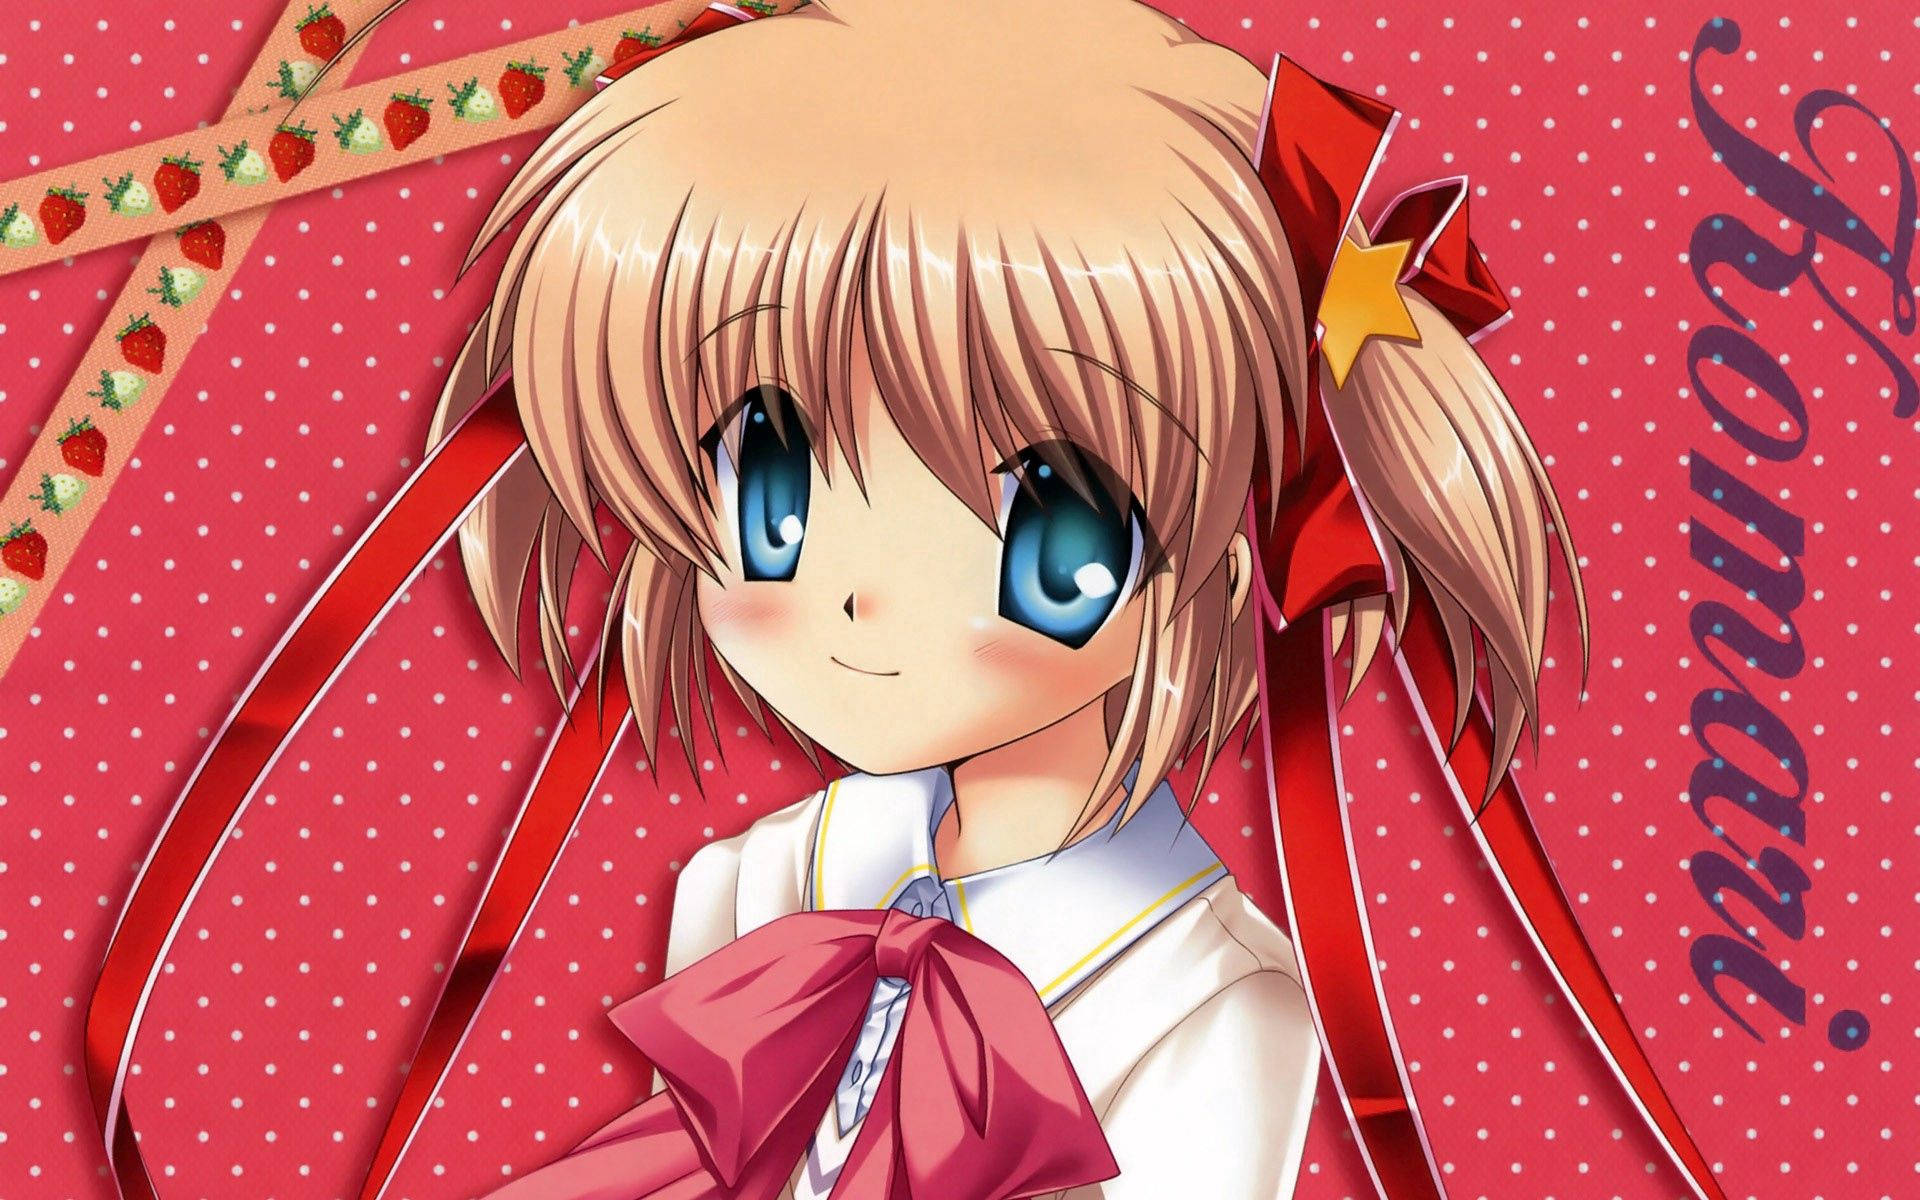 Pretty Anime Girl Red Image Wallpaper